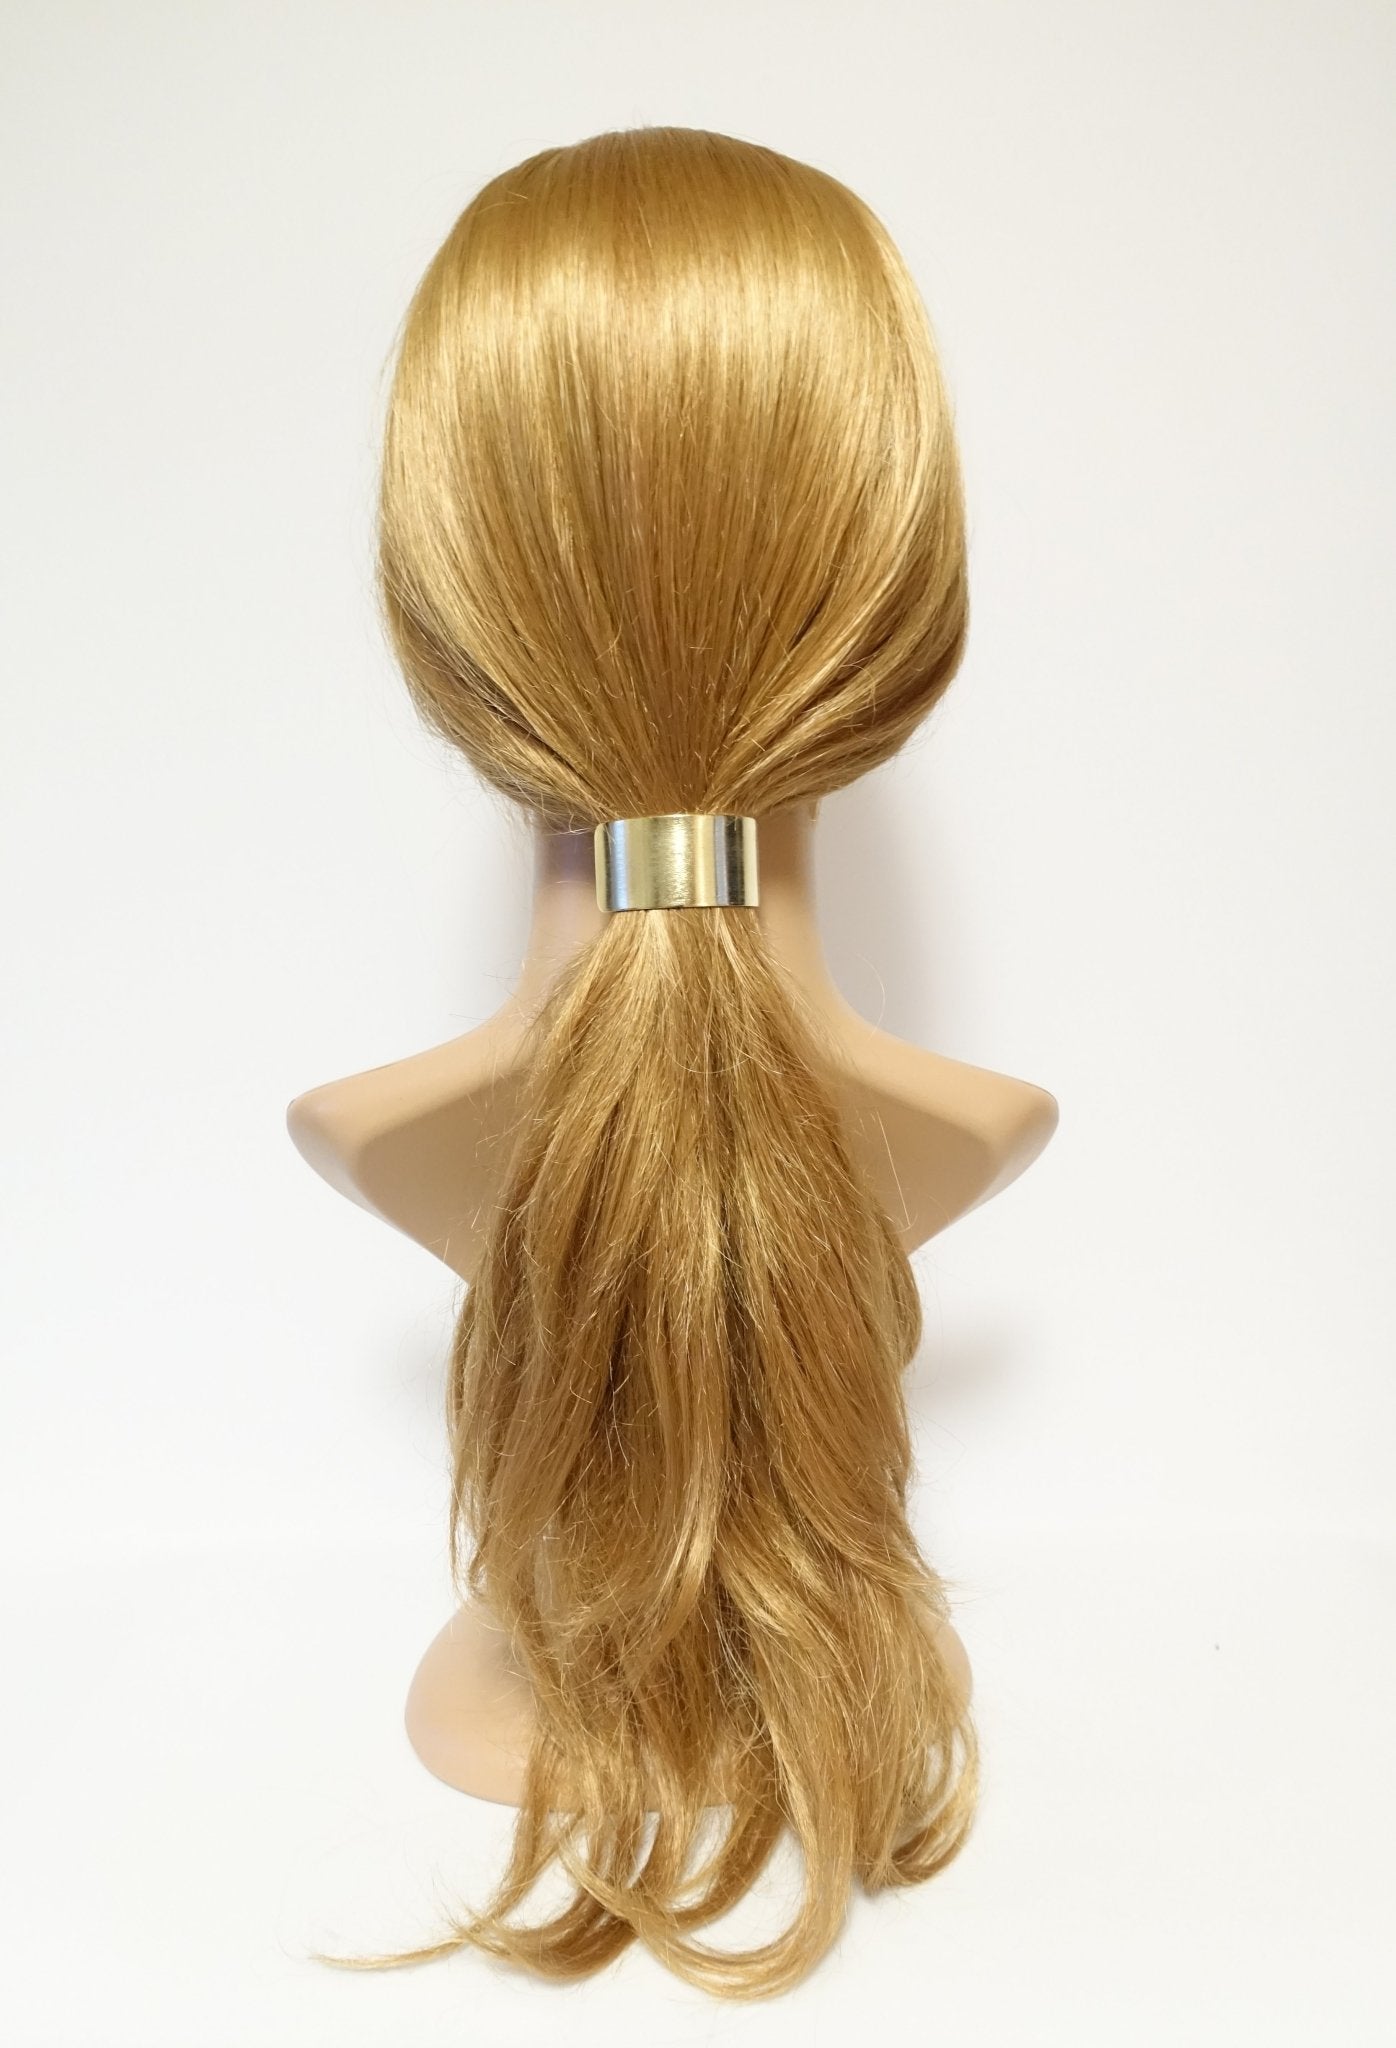 veryshine.com claw/banana/barrette Small Gold Brass Metal Curve Cuff Ponytail Hair Barrette Clip